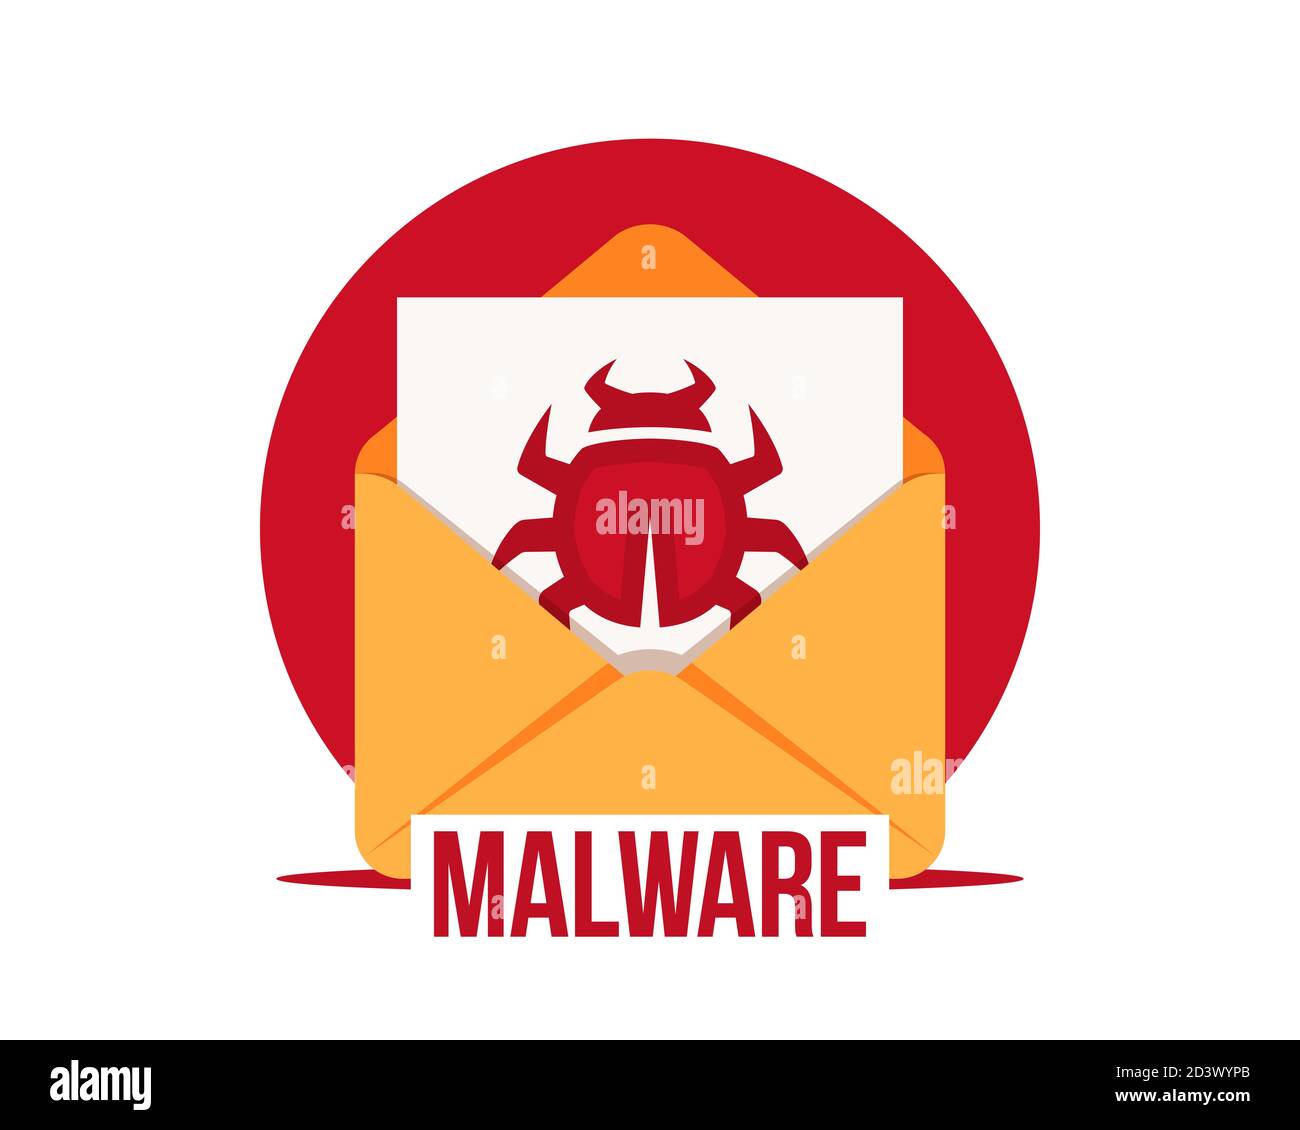 Symbol für Malware per E-Mail. Virus im Brief. Viren, Malware, E-Mail-Betrug, E-Mail-Spam, Phishingbetrug, Hacker-Angriffskonzept. Cyberkriminalität Stock Vektor